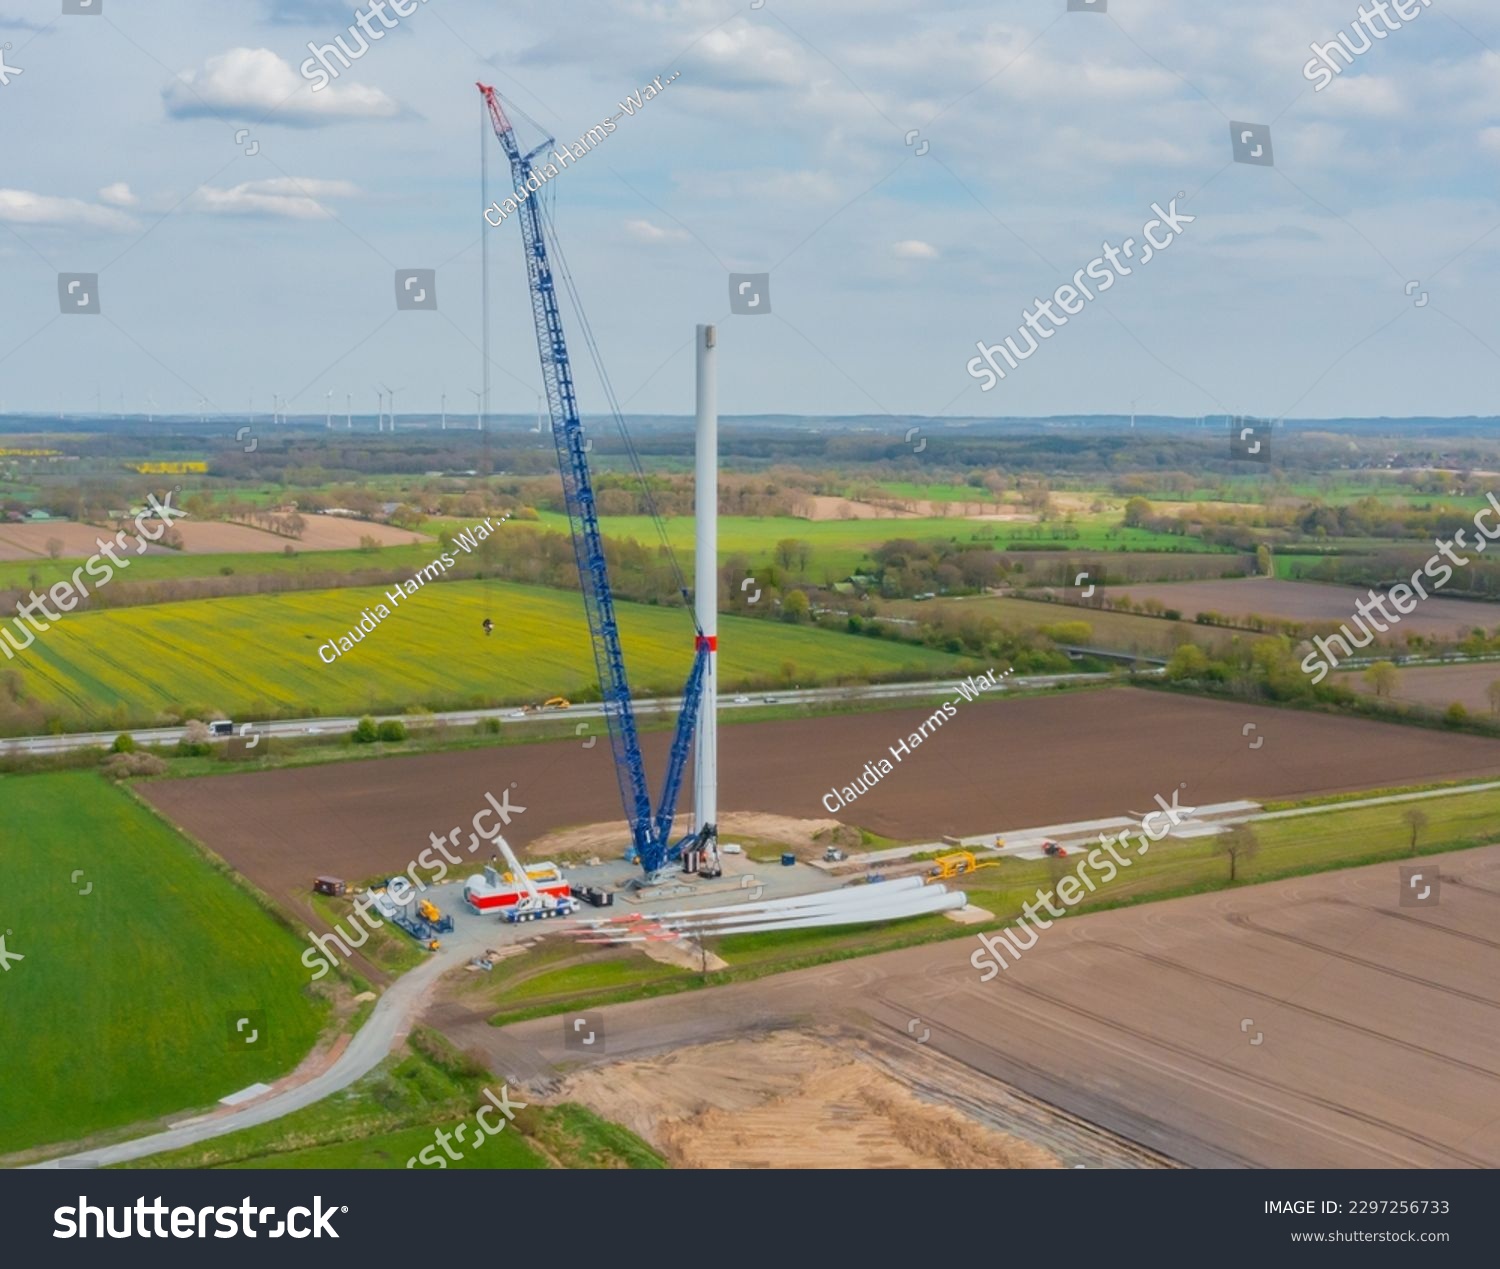 Construction of a wind turbine with a blue crawler crane #2297256733